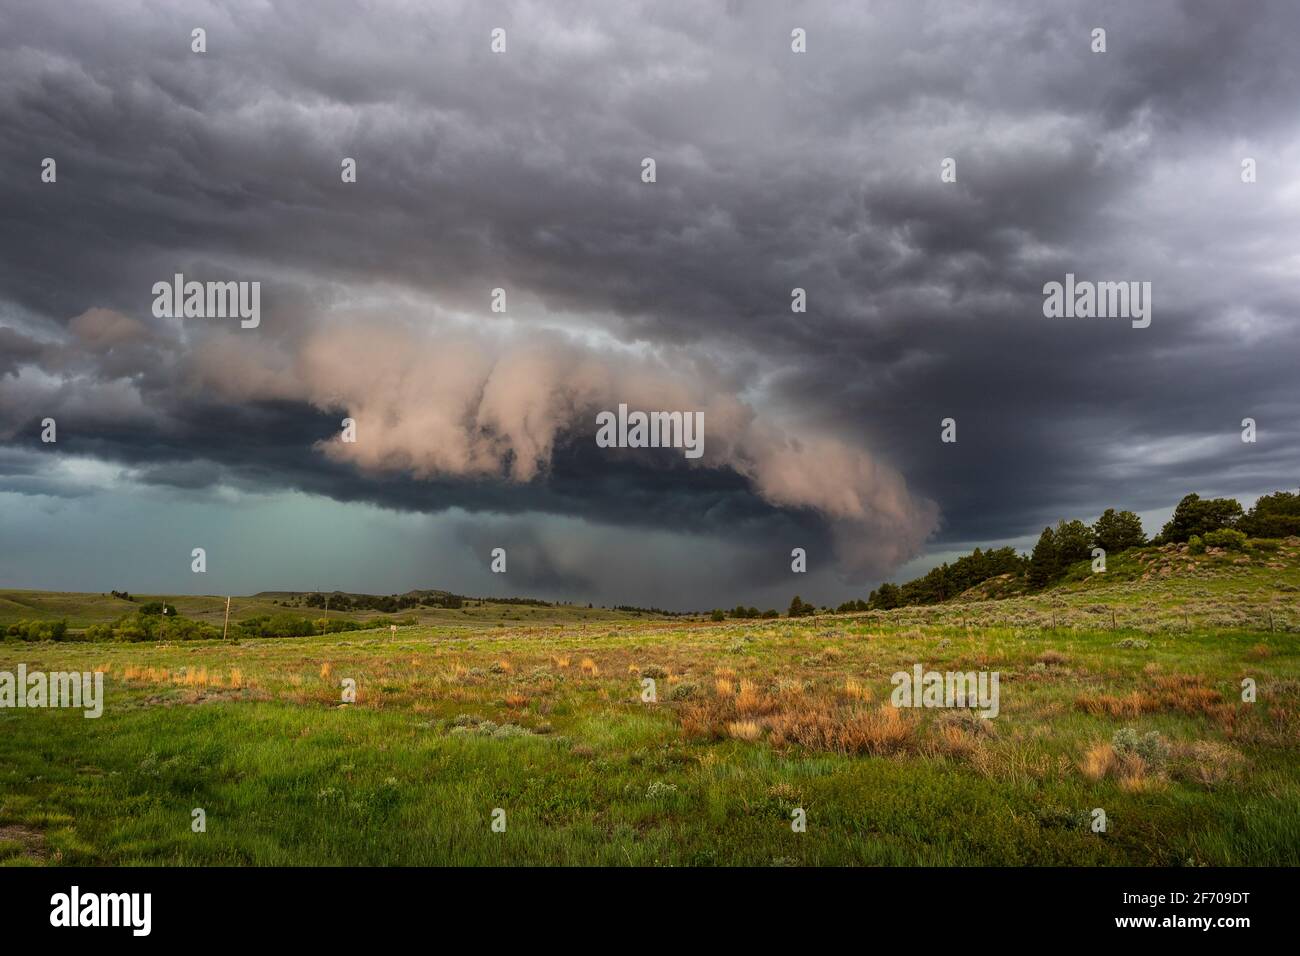 Dramatic storm cloud and rain-wrapped tornado approaching Glendo, Wyoming Stock Photo